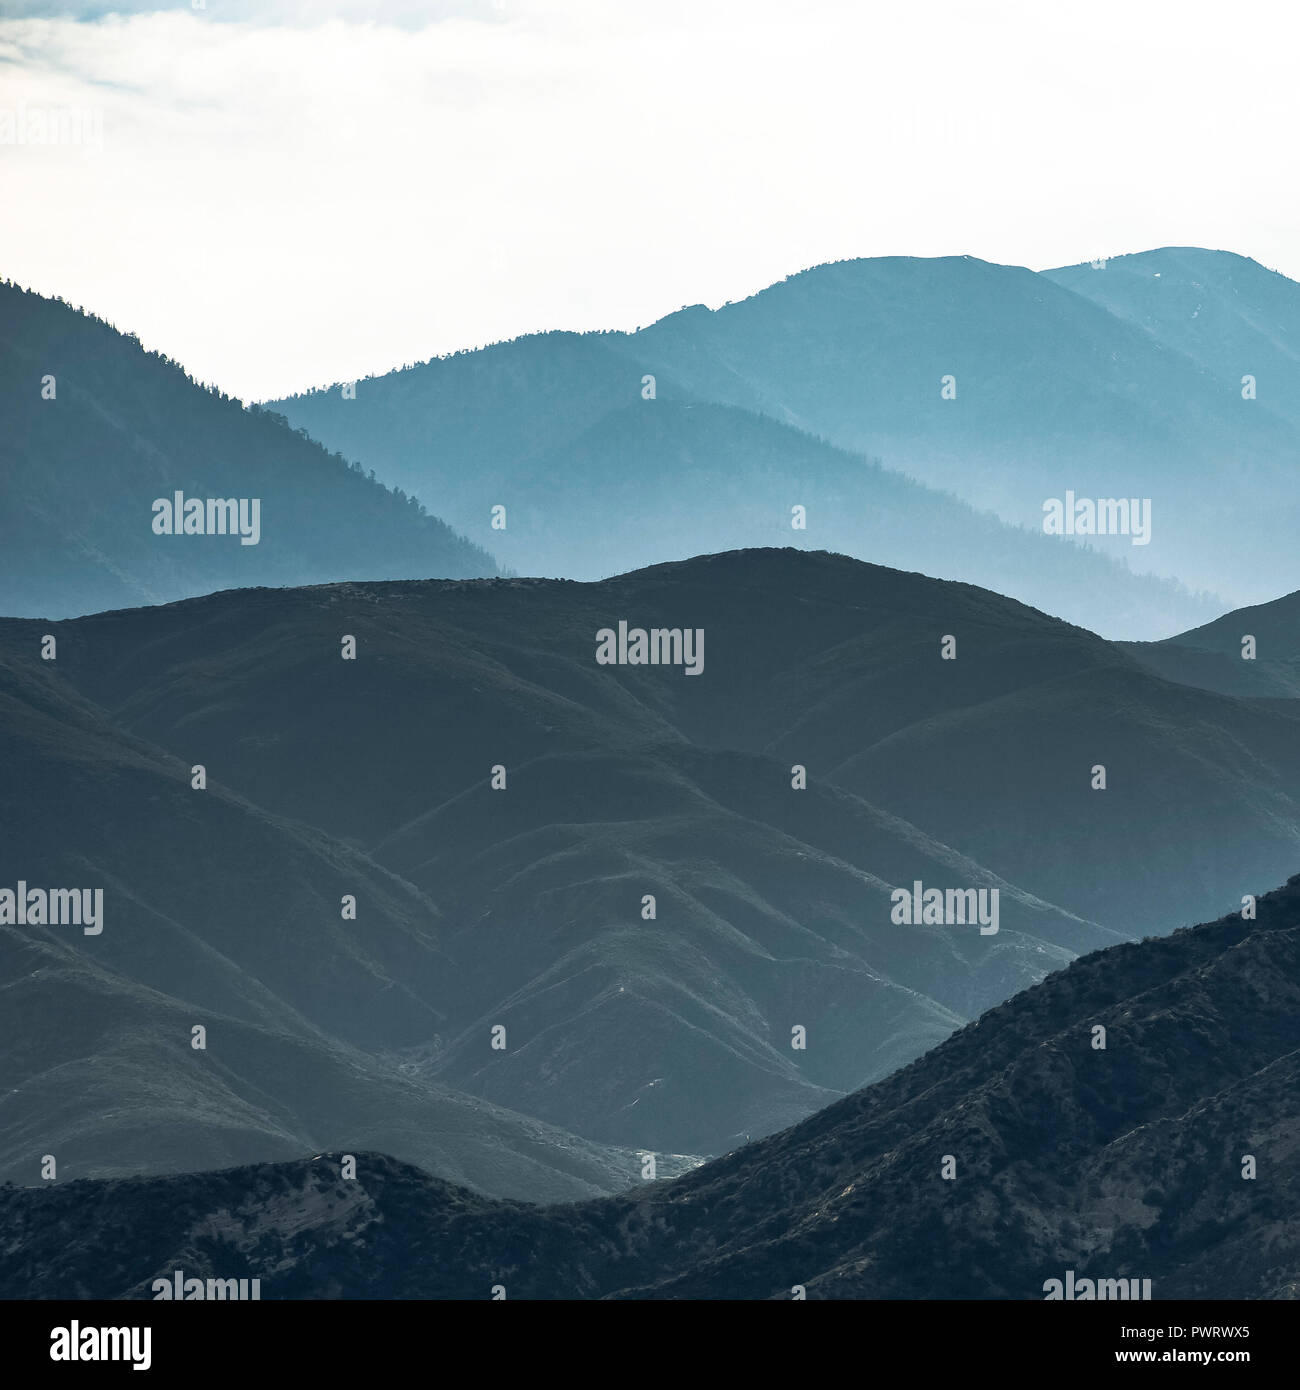 A sihouetted mountain range in Ontario California Stock Photo